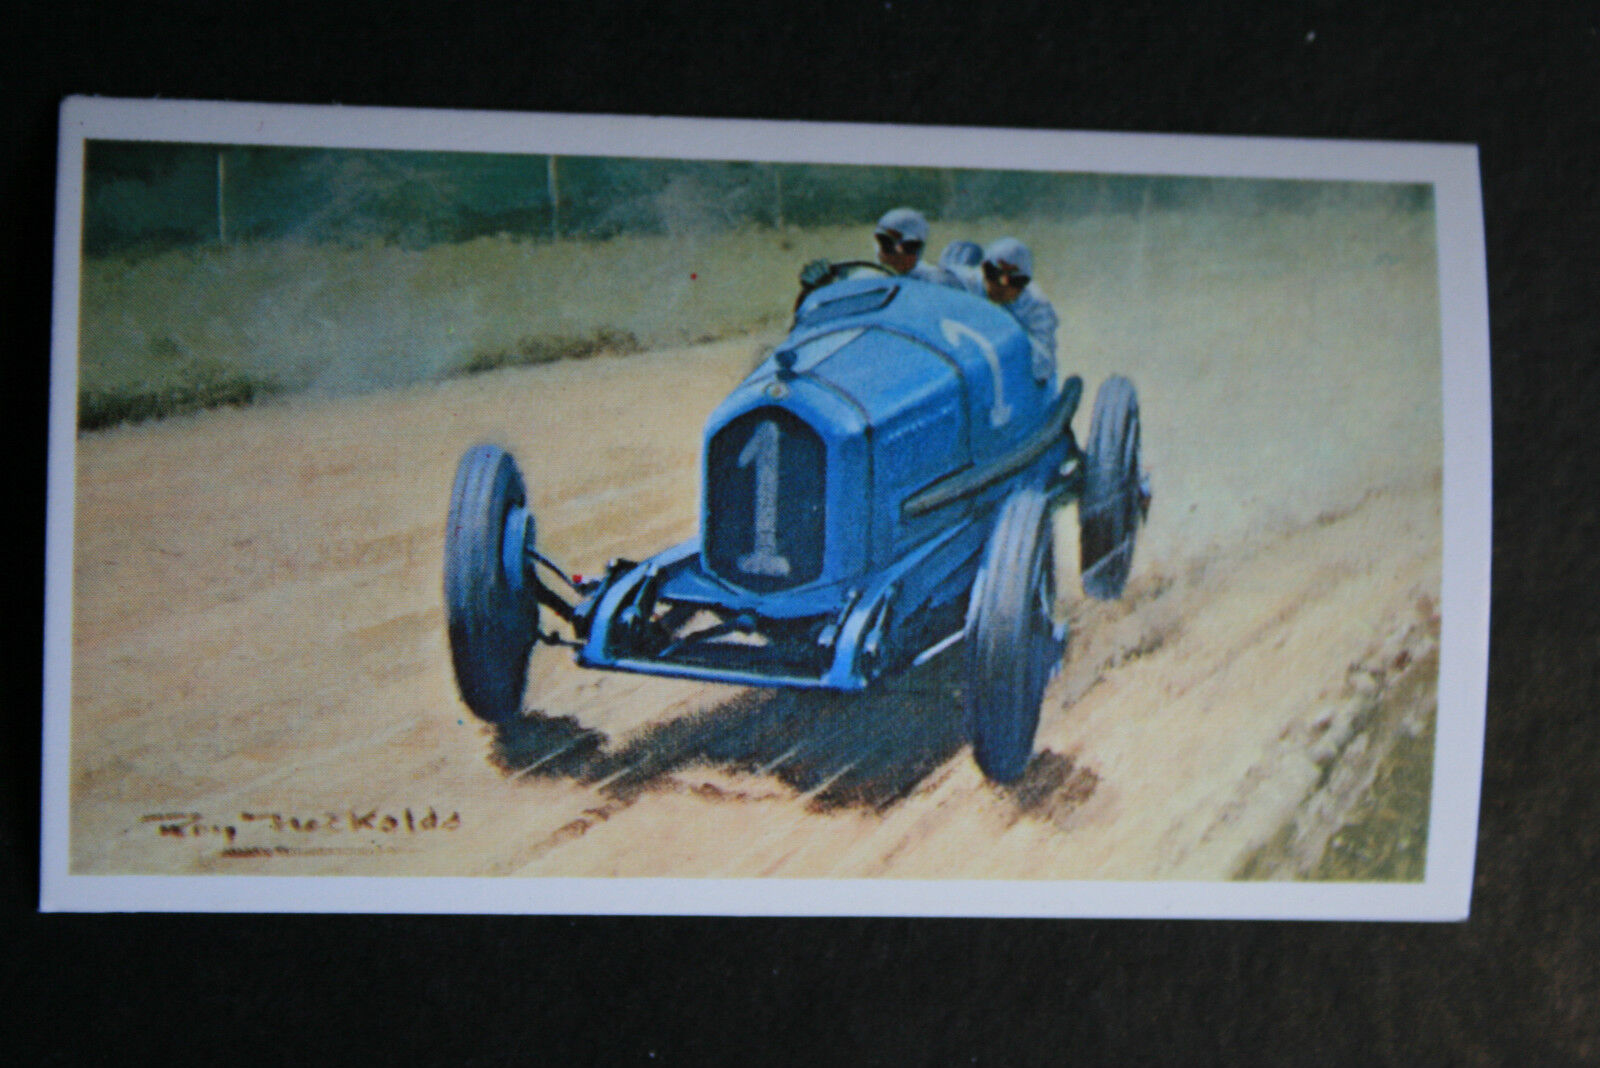 BALLOT 3 Litre  1921 French GP  Le Mans  Motor Racing Card  BD13  